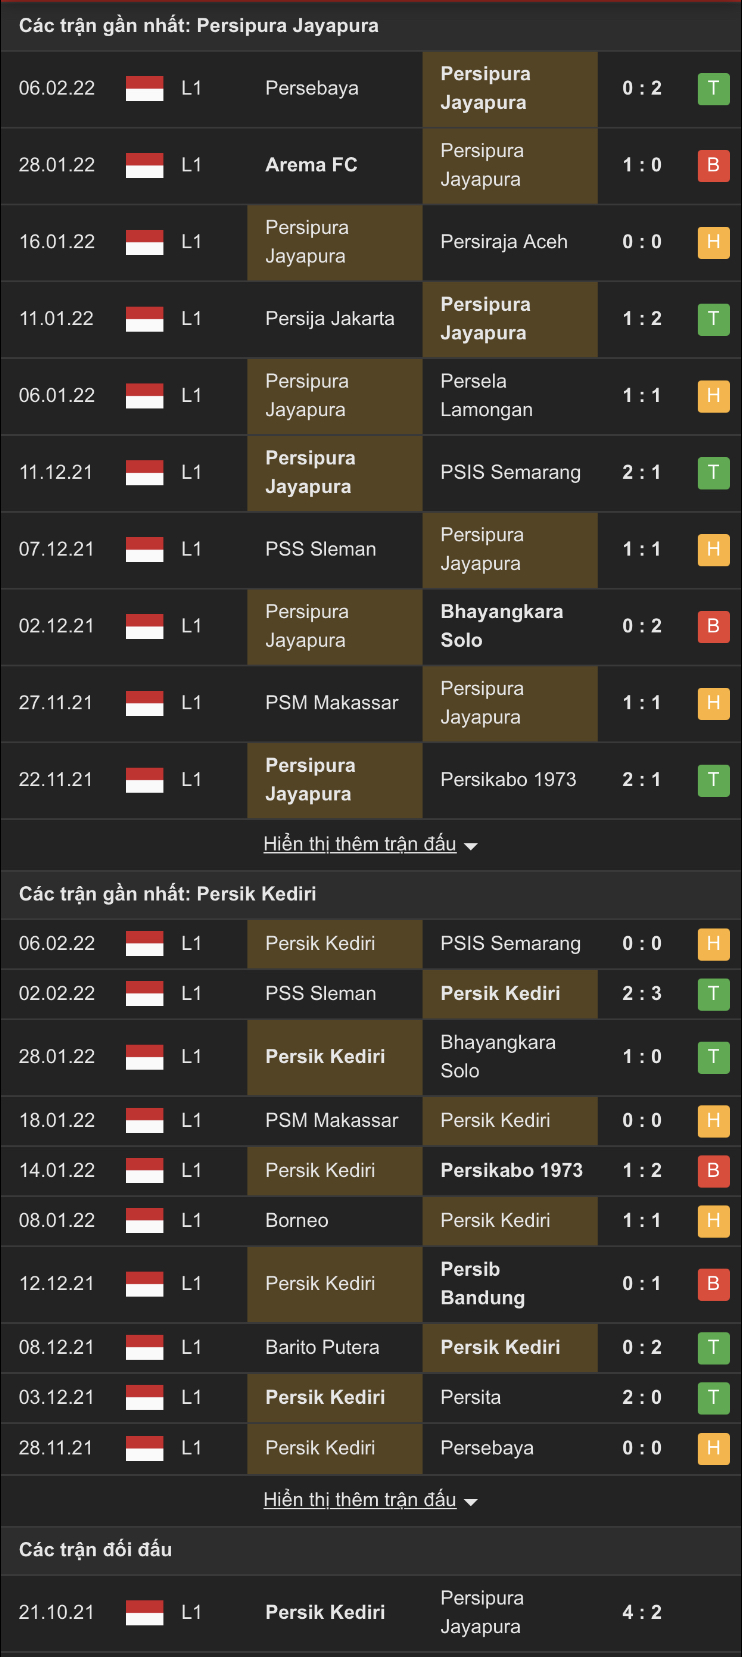 Nhận định, soi kèo Persipura vs Persik Kediri, 15h15 ngày 10/2 - Ảnh 1